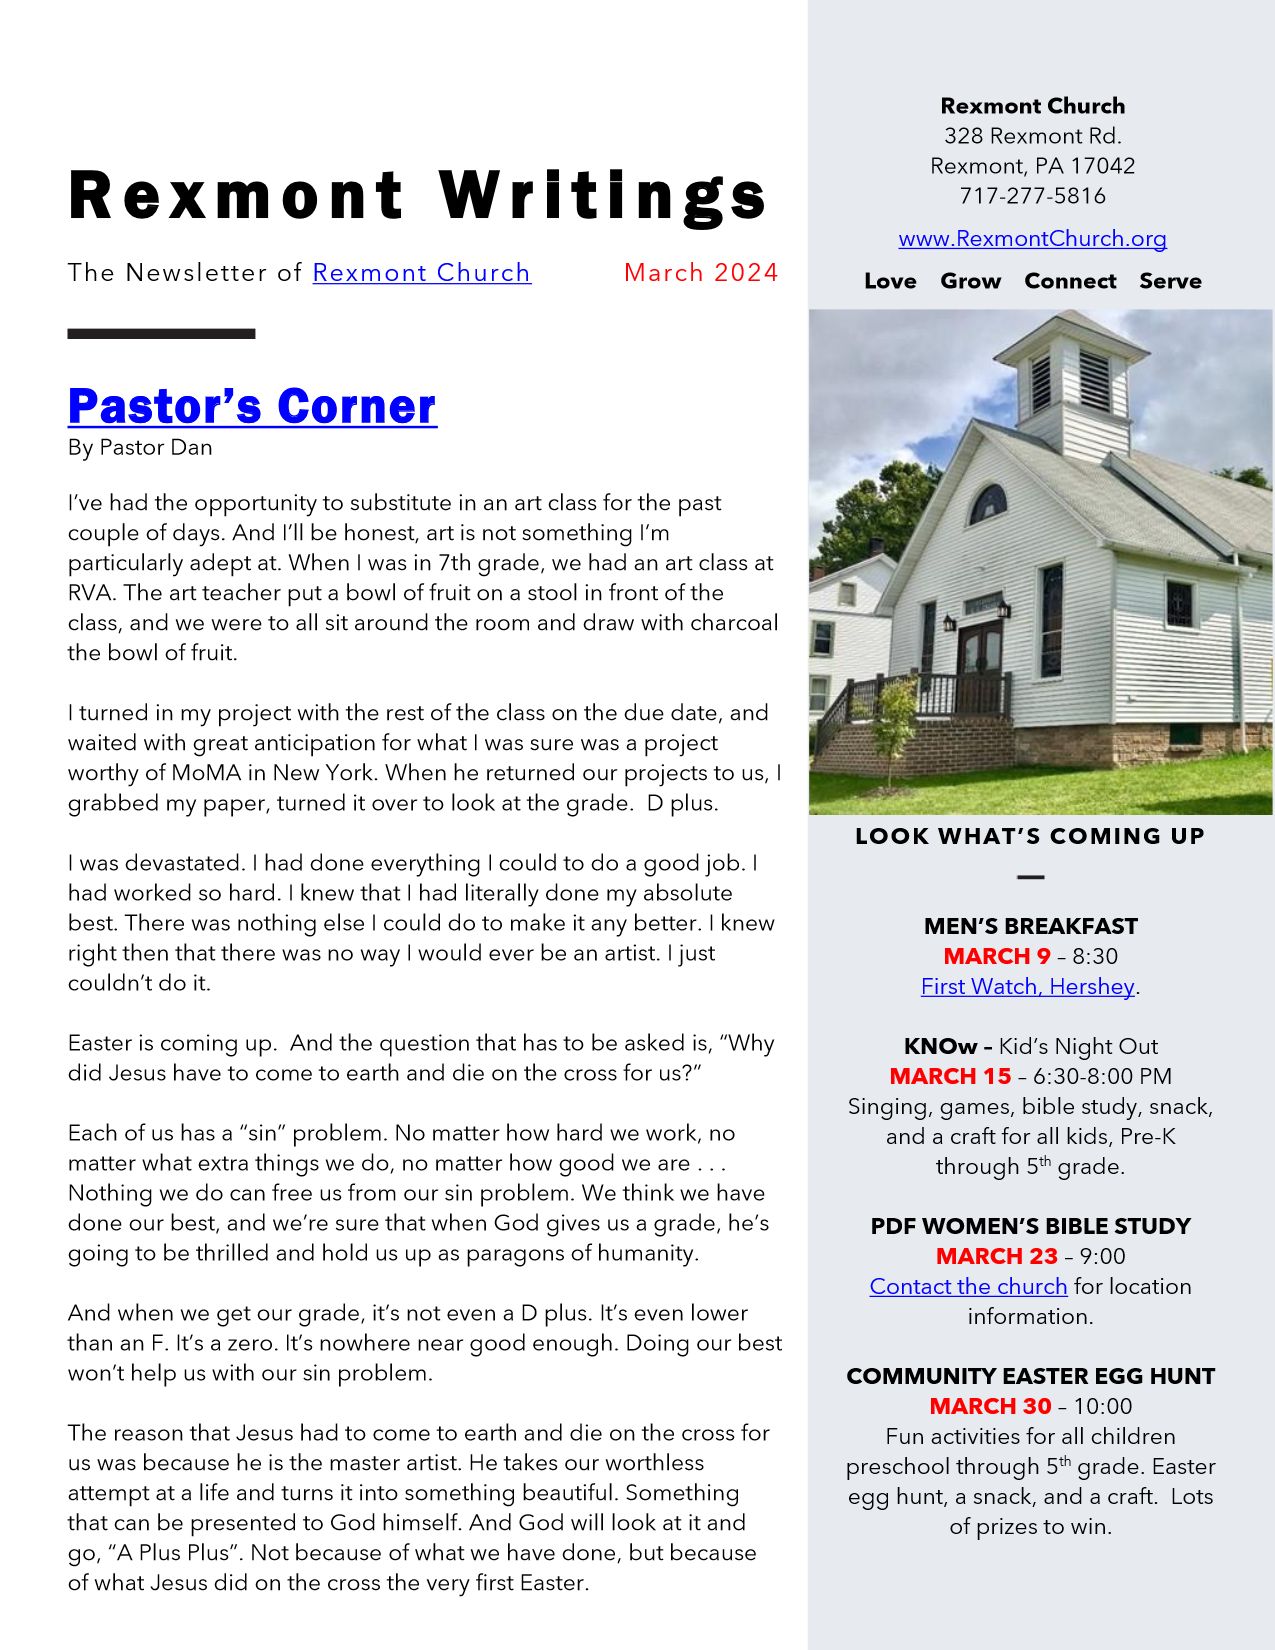 Rexmont Church Newsletter -- March 2024-1